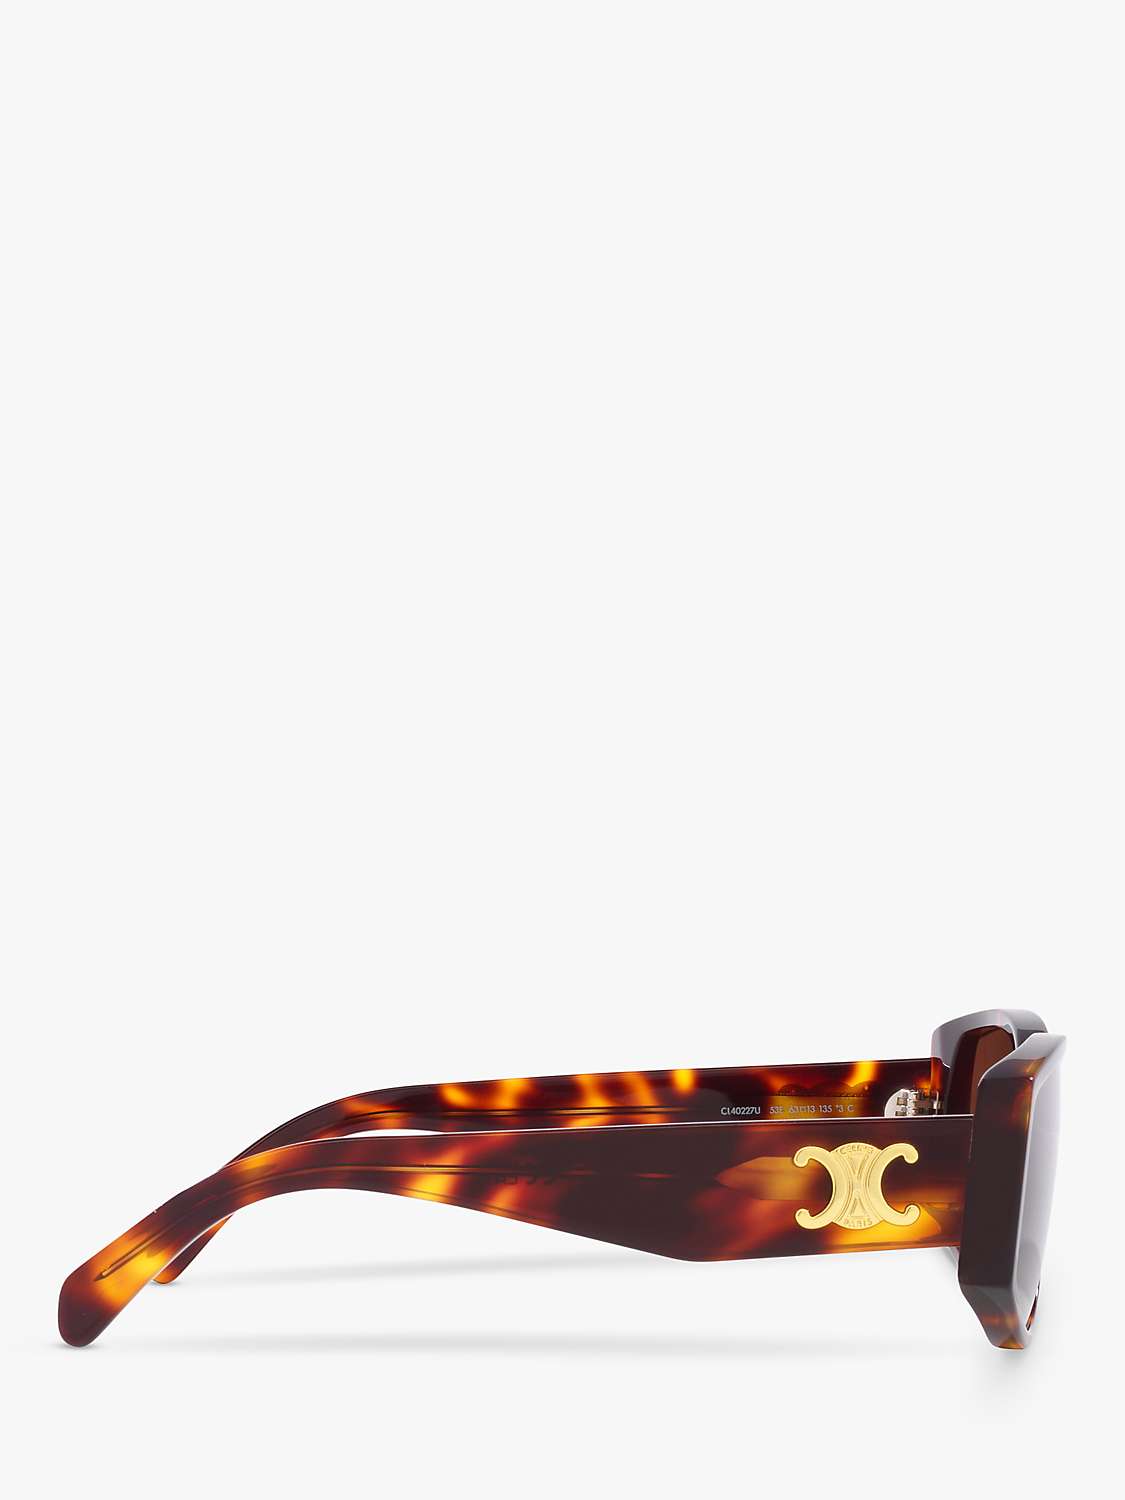 Buy Celine CL40227U Women's Rectangular Sunglasses, Tortoise Blonde/Brown Online at johnlewis.com